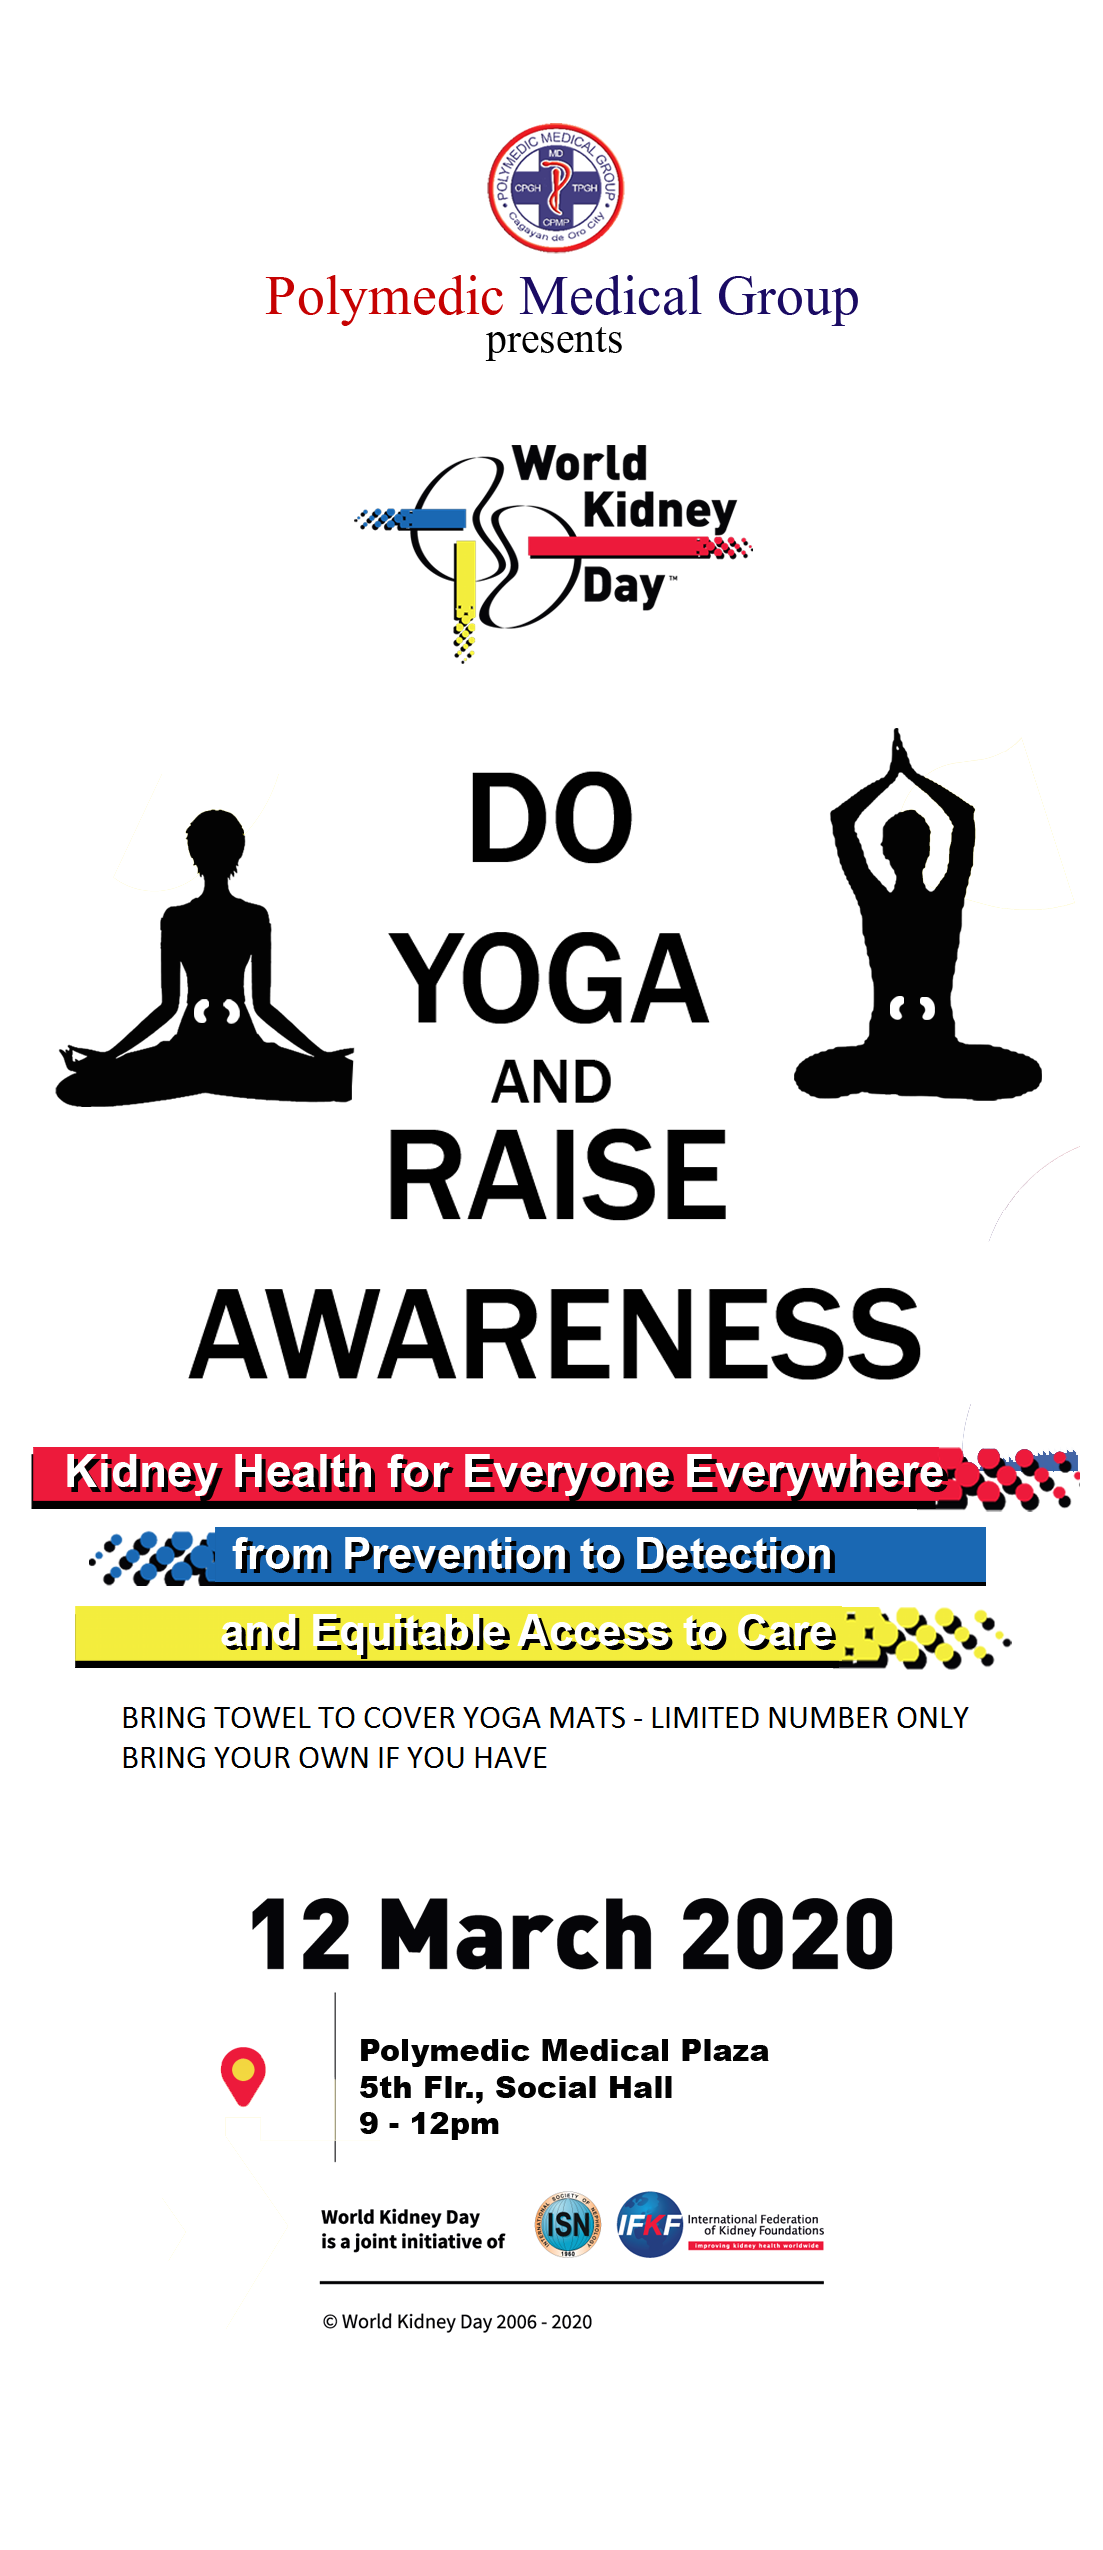 Do Yoga and Raise Awarness on World Kidney Day